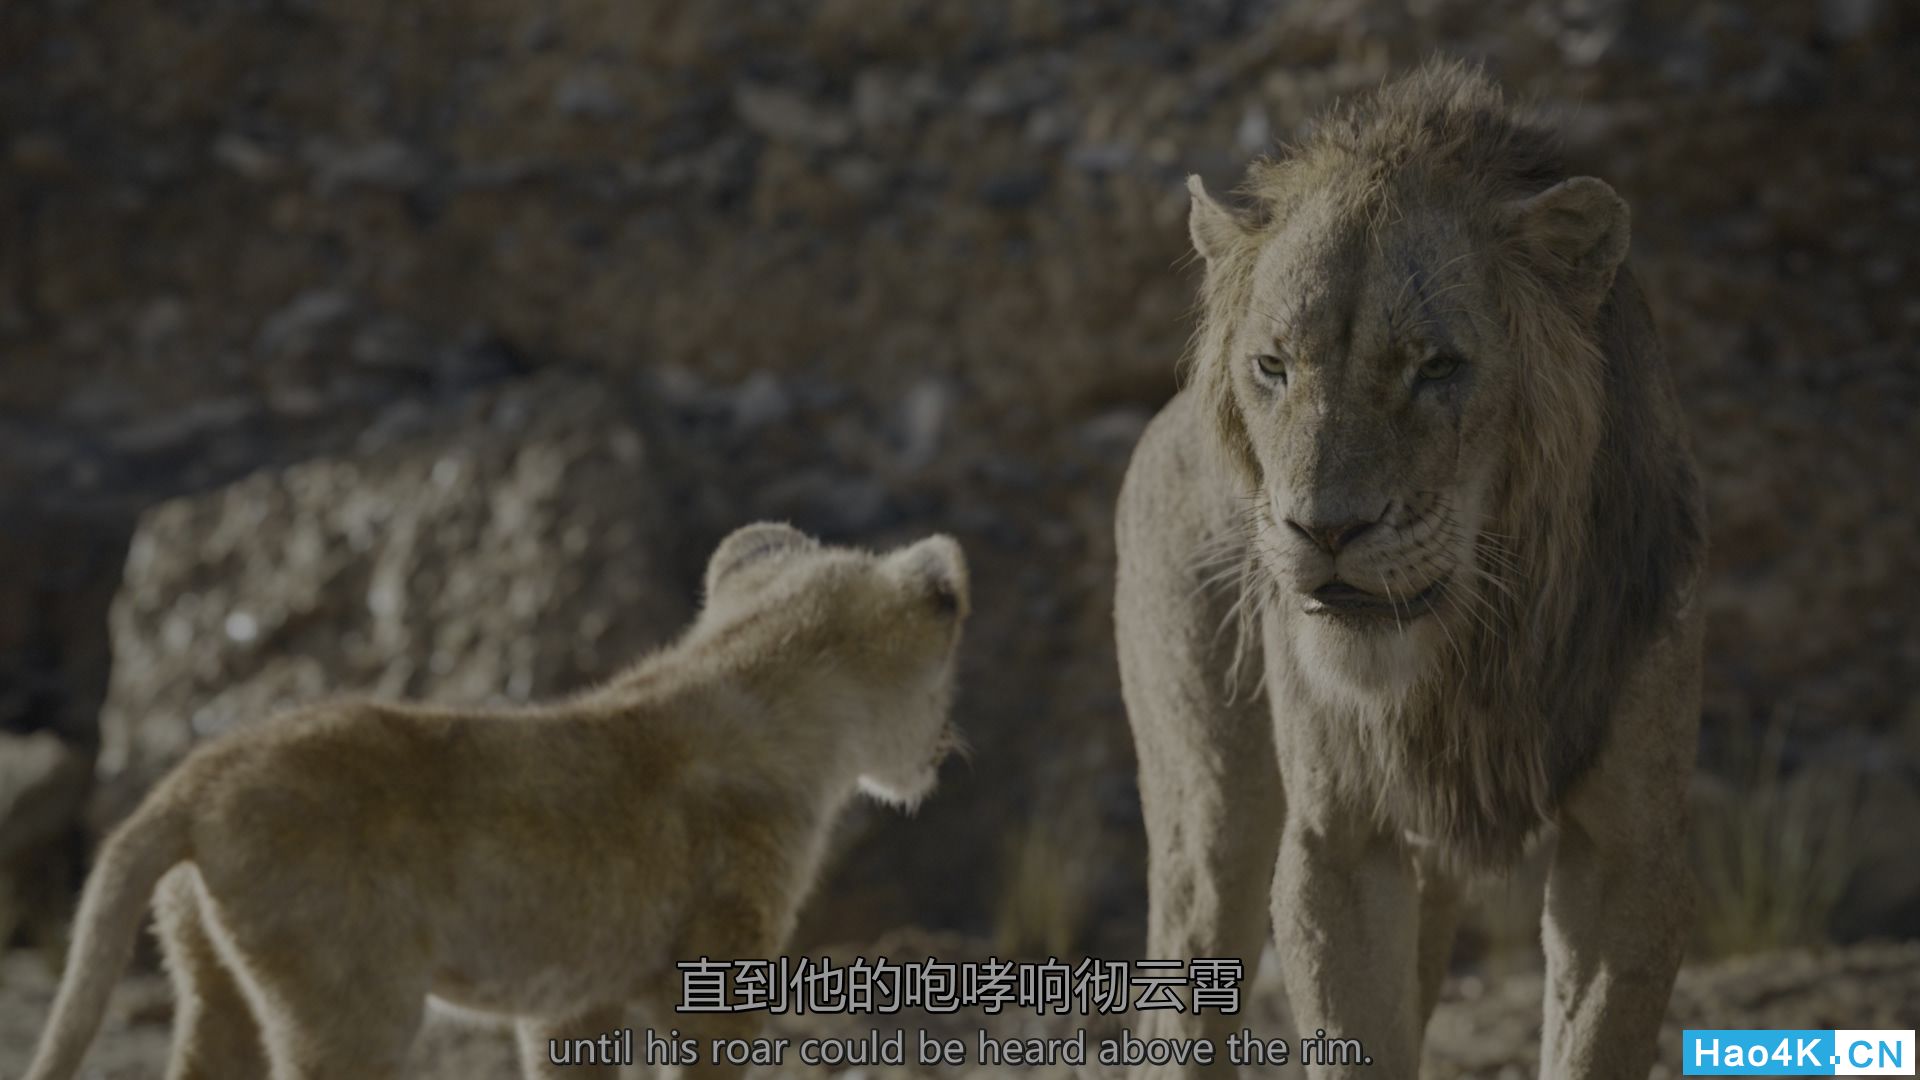 The.Lion.King.2019.2160p.BluRay.REMUX.HEVC.DTS-HD.MA.TrueHD.7.1-FGT.mkv_20191016.jpg